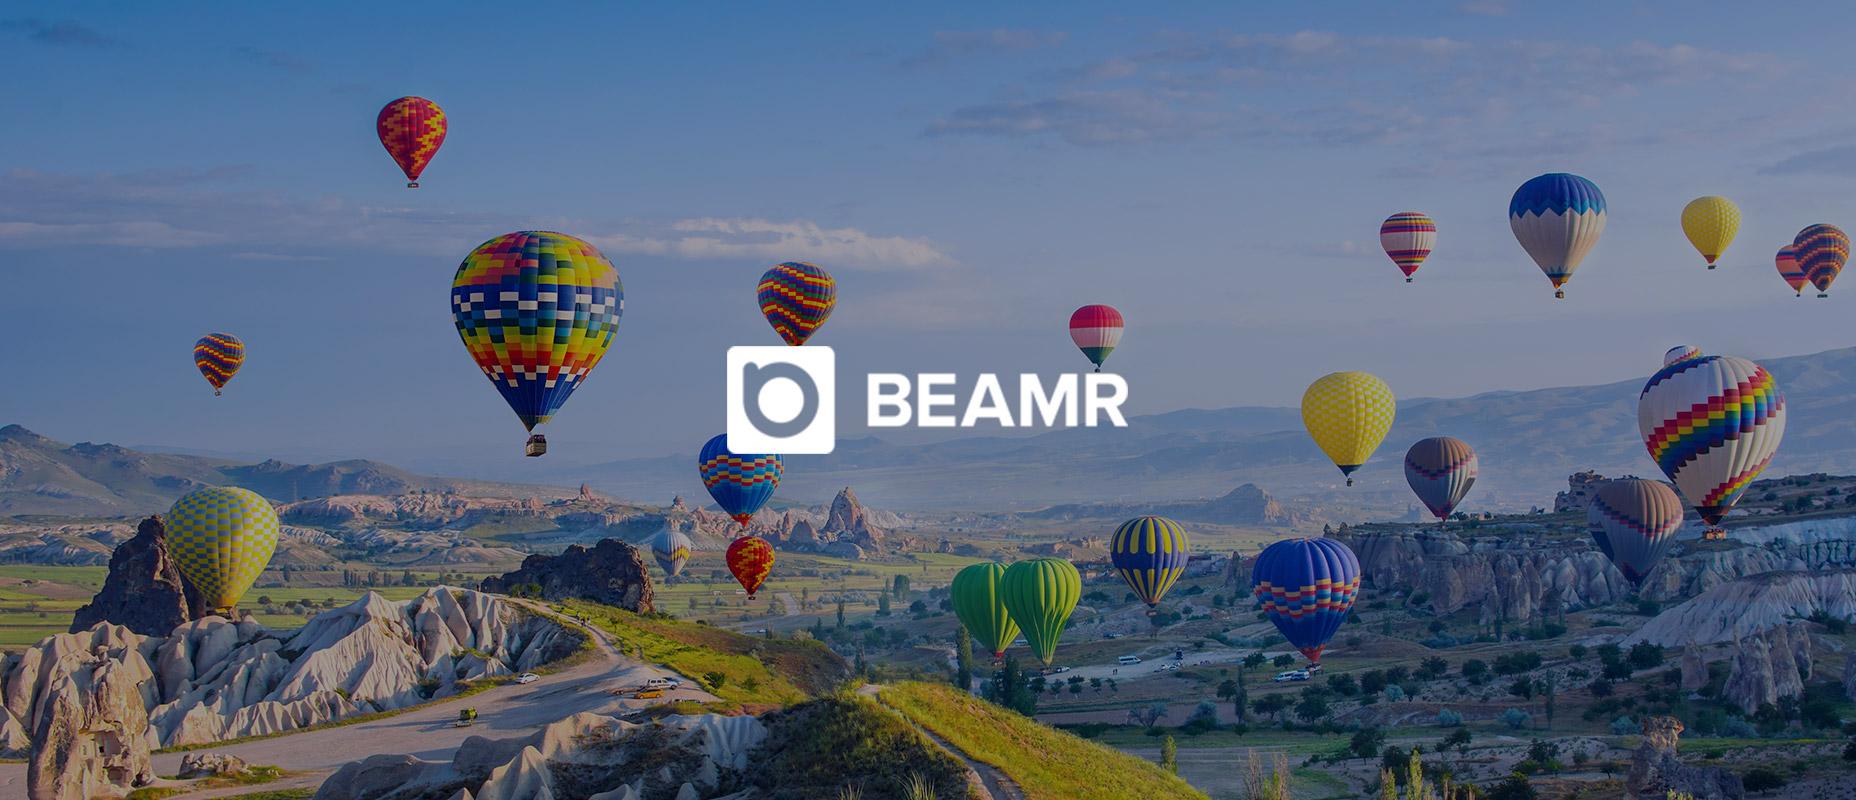 IPO ของ Beamr Imaging: เทคโนโลยีการบีบอัดวิดีโอตามความต้องการ